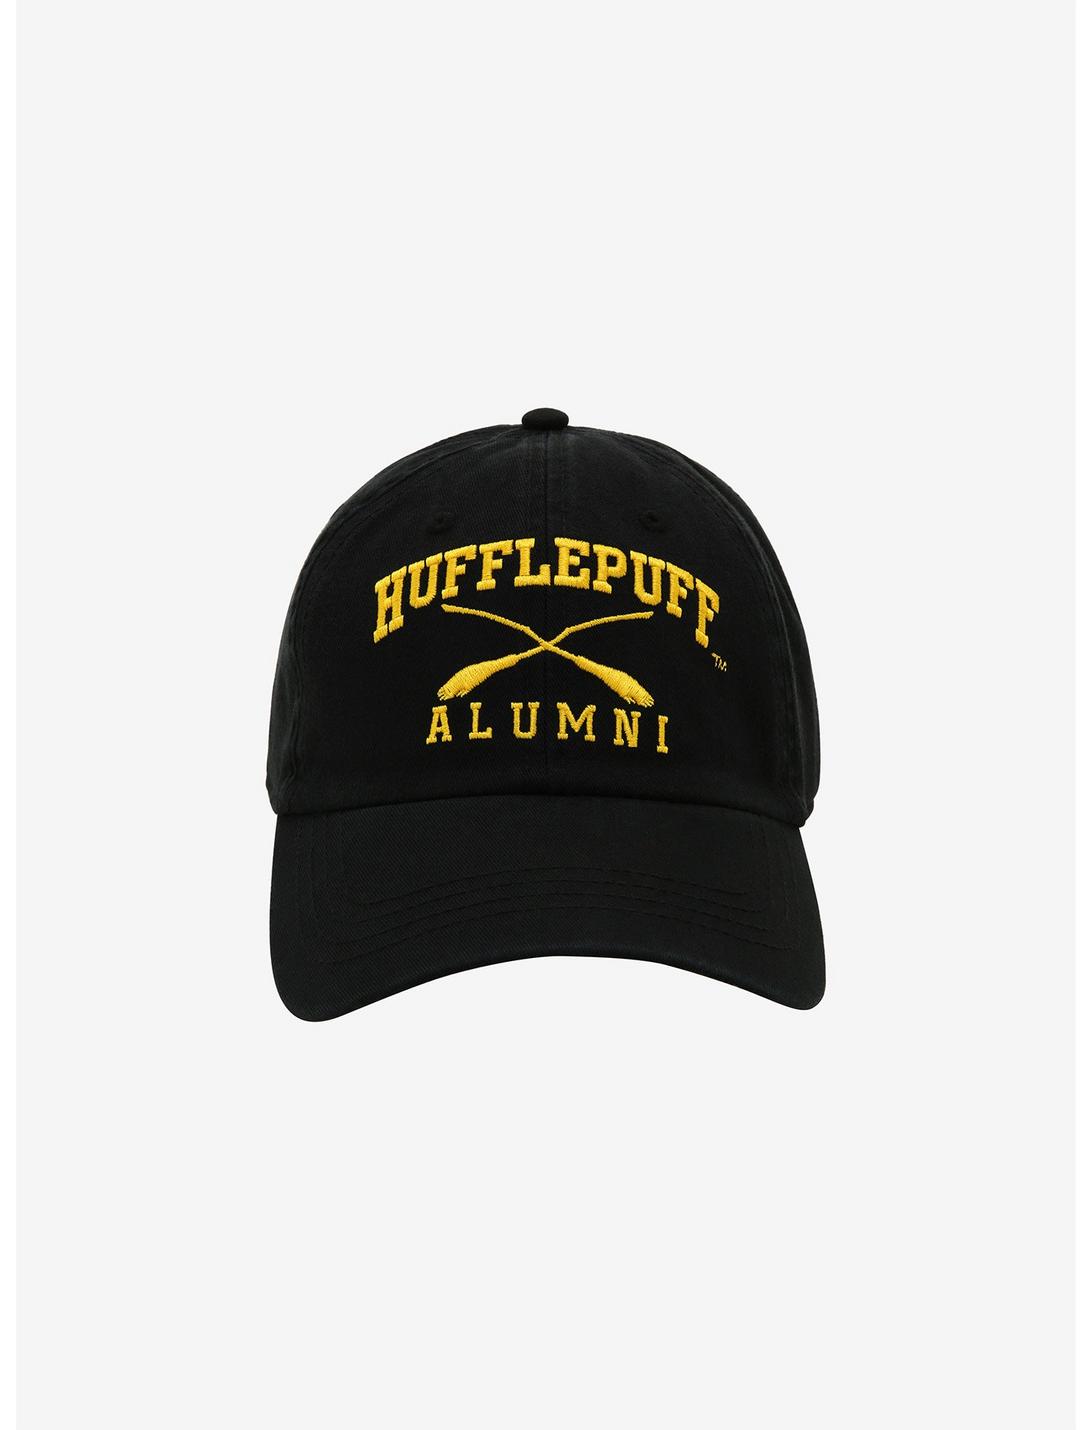 Harry Potter Hufflepuff Alumni Cap - BoxLunch Exclusive, , hi-res